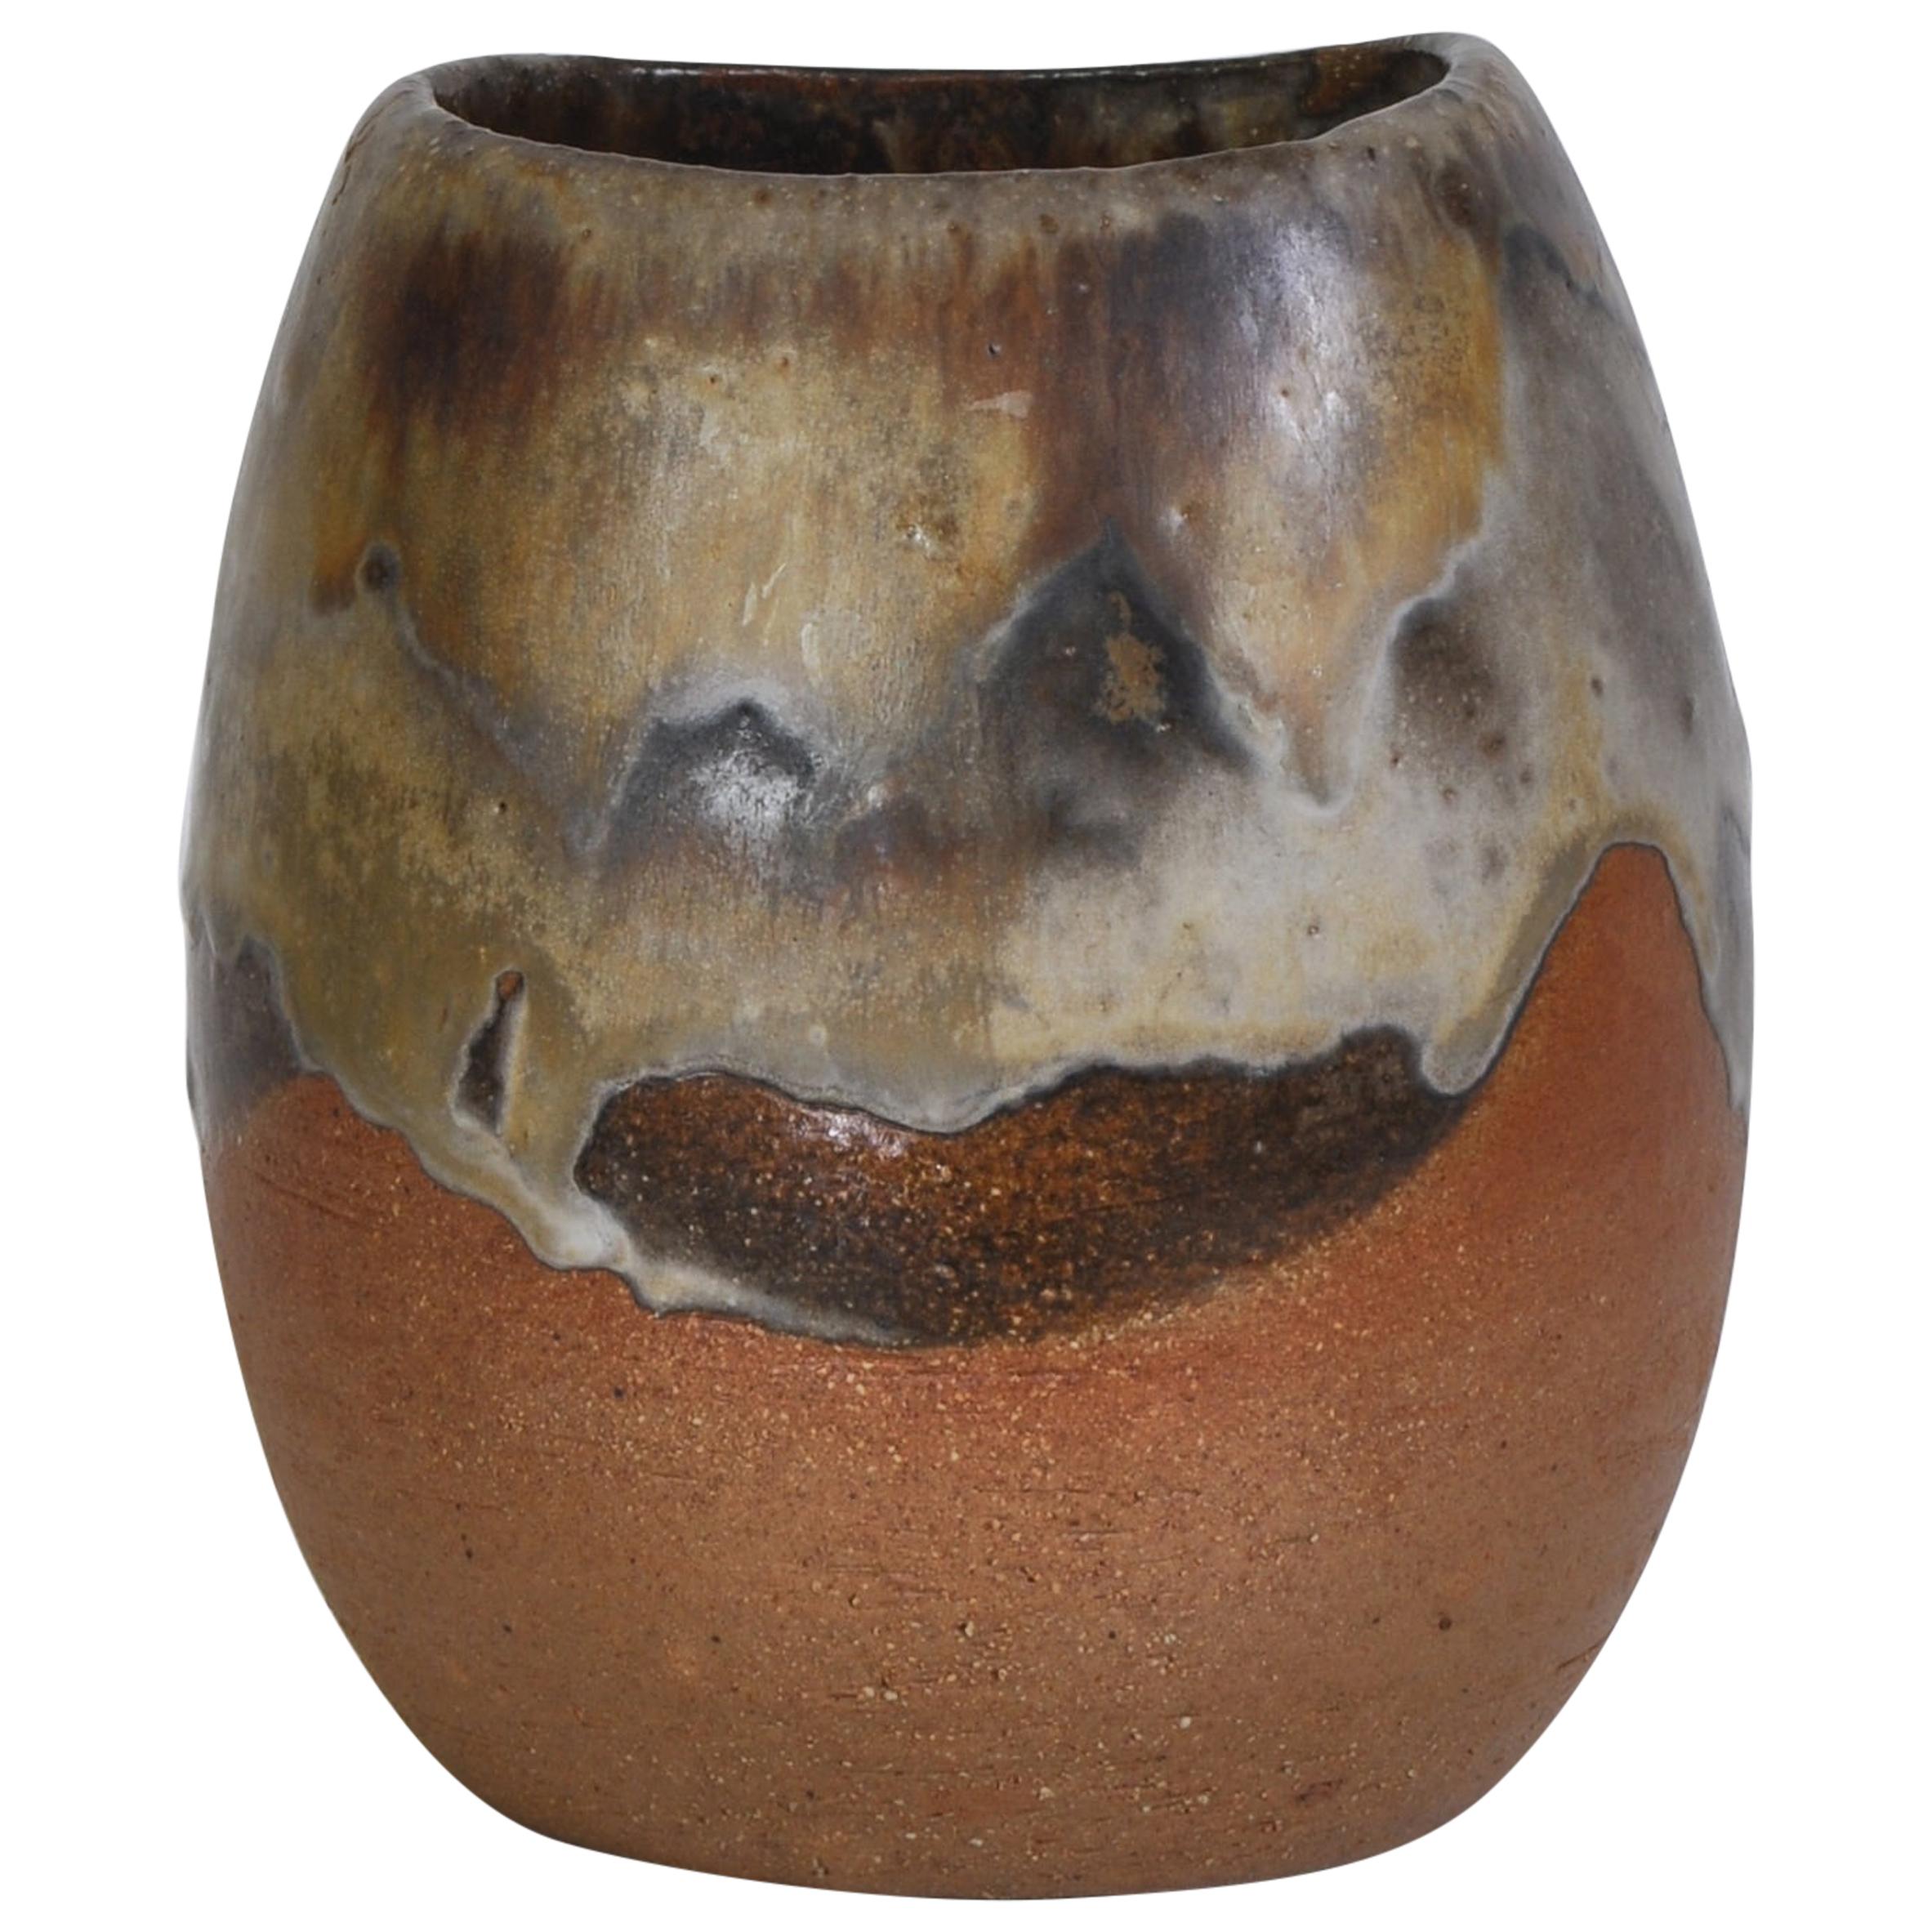 1970s "Axella" Organic Stoneware Vase in Earth Colors by Aksel Larsen, Denmark